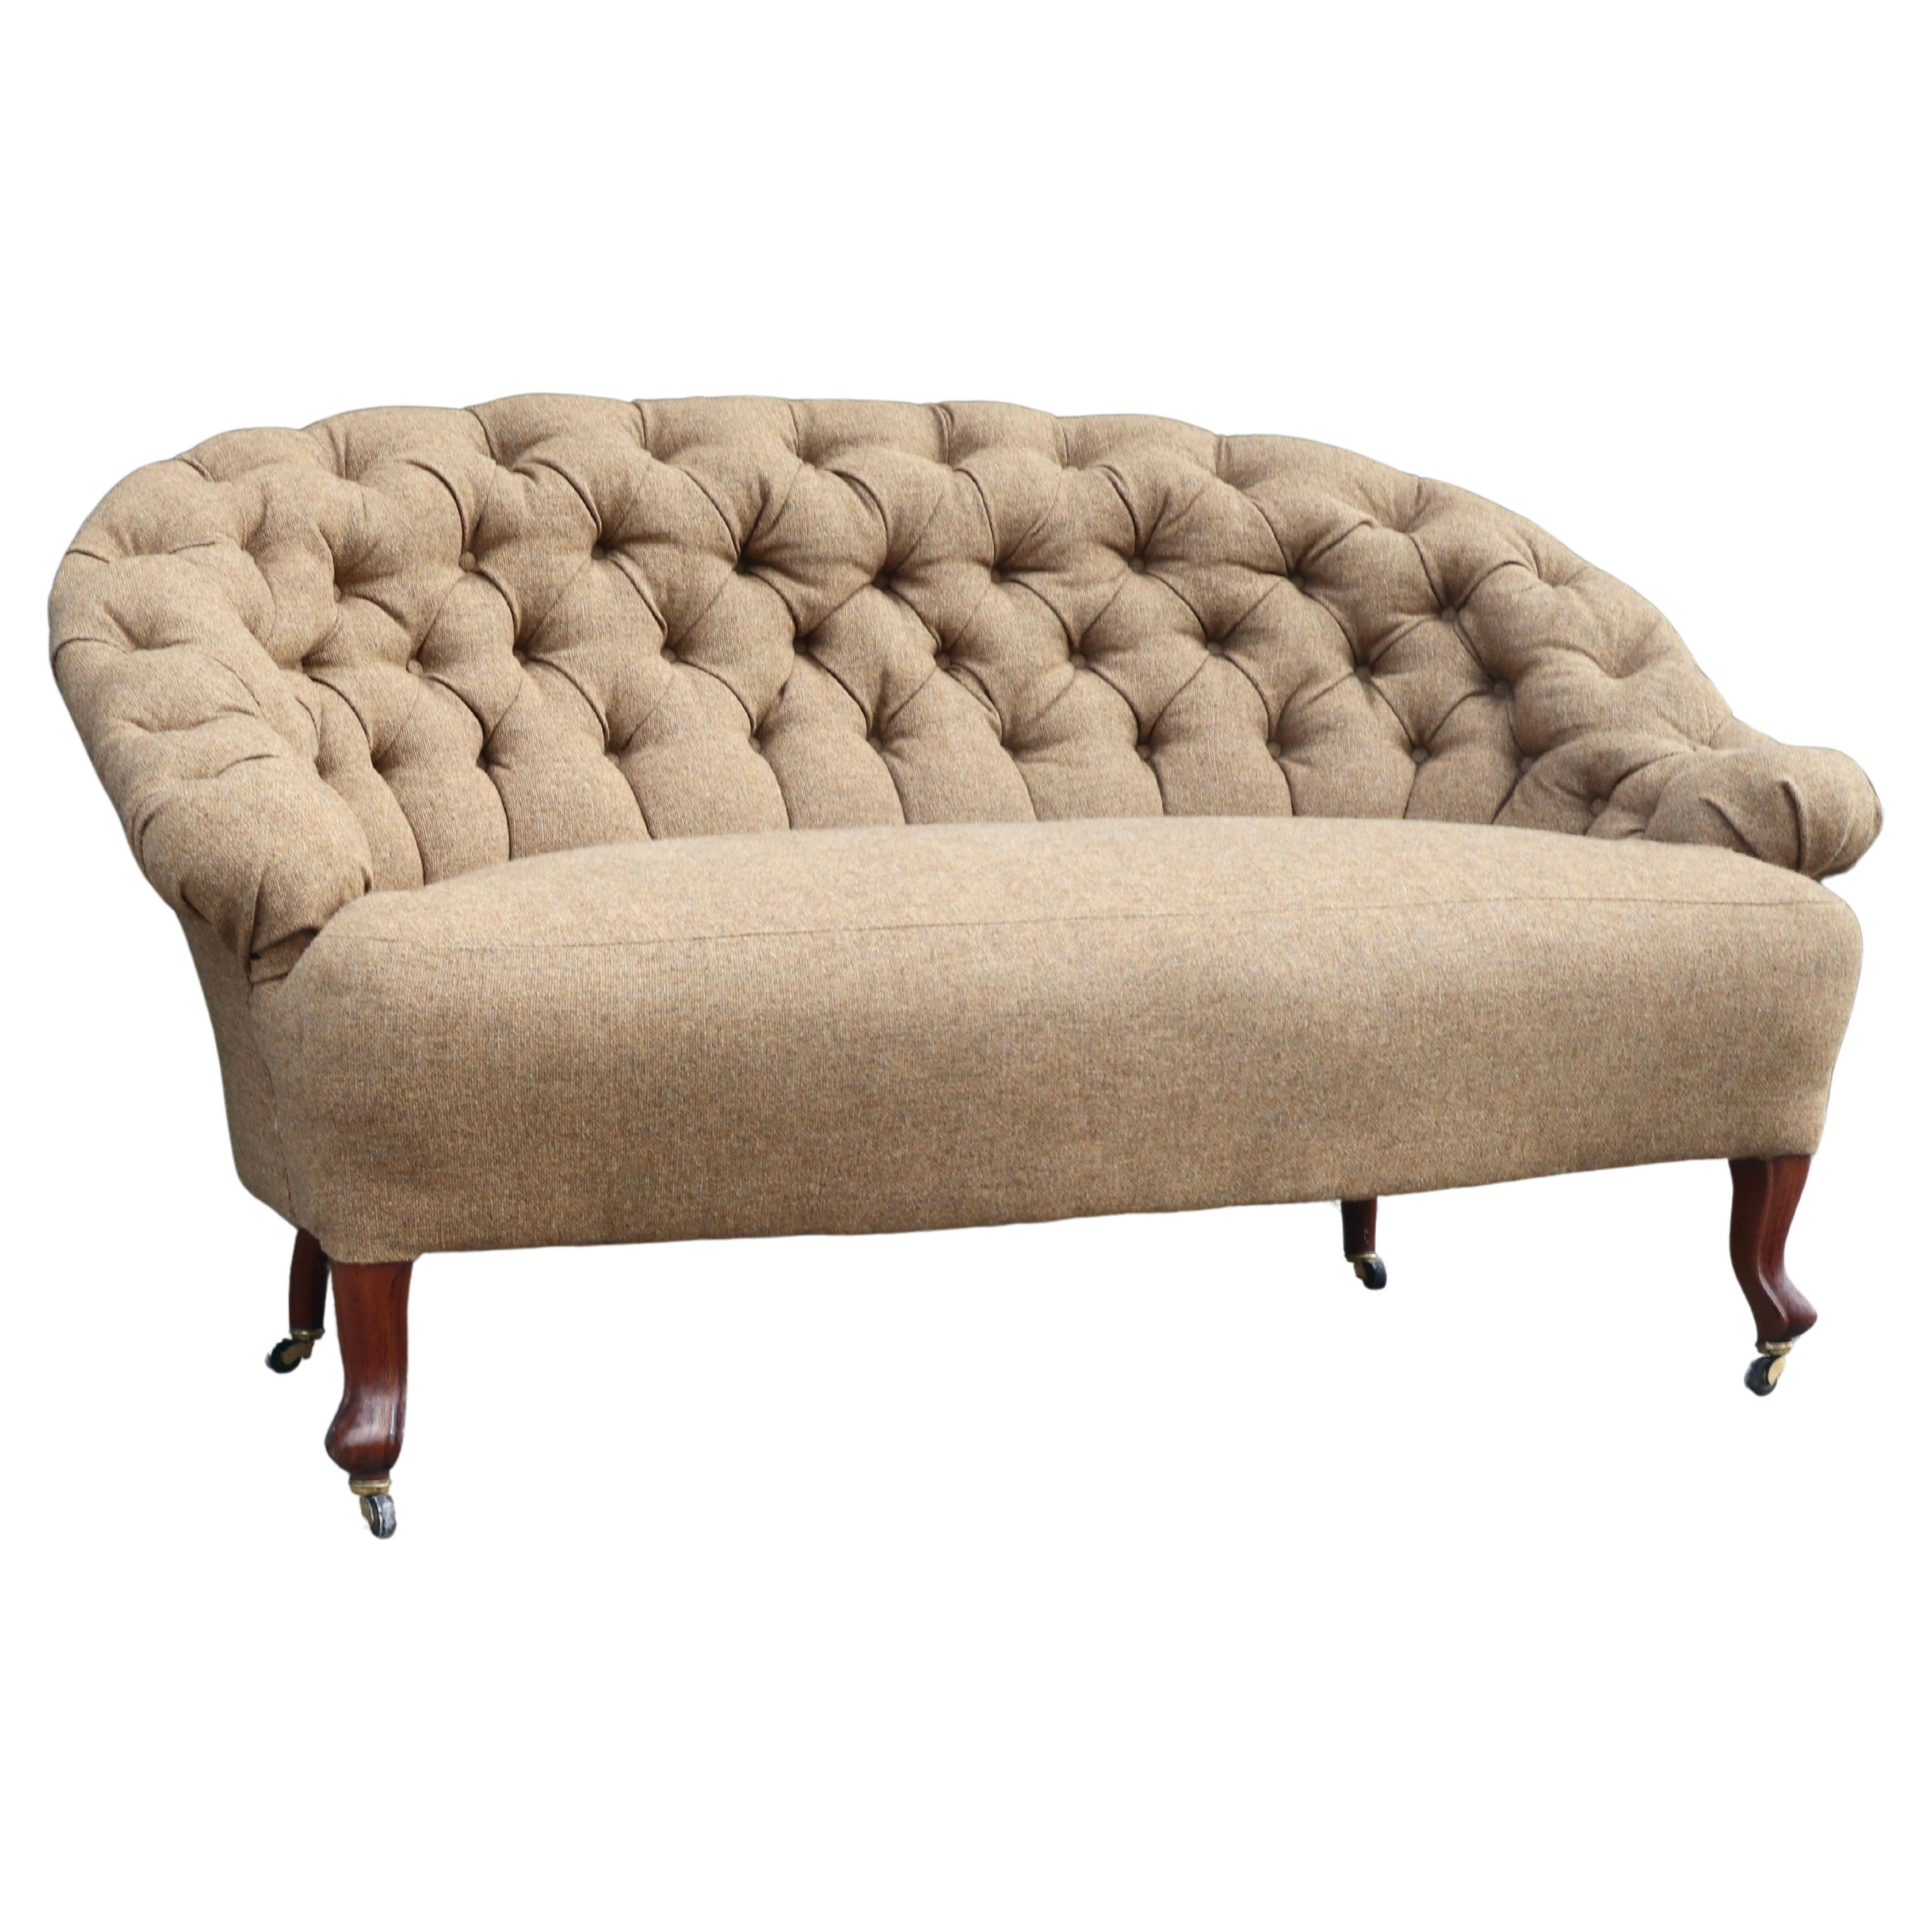 Antique French 19th century Napoleon III crapaud sofa For Sale